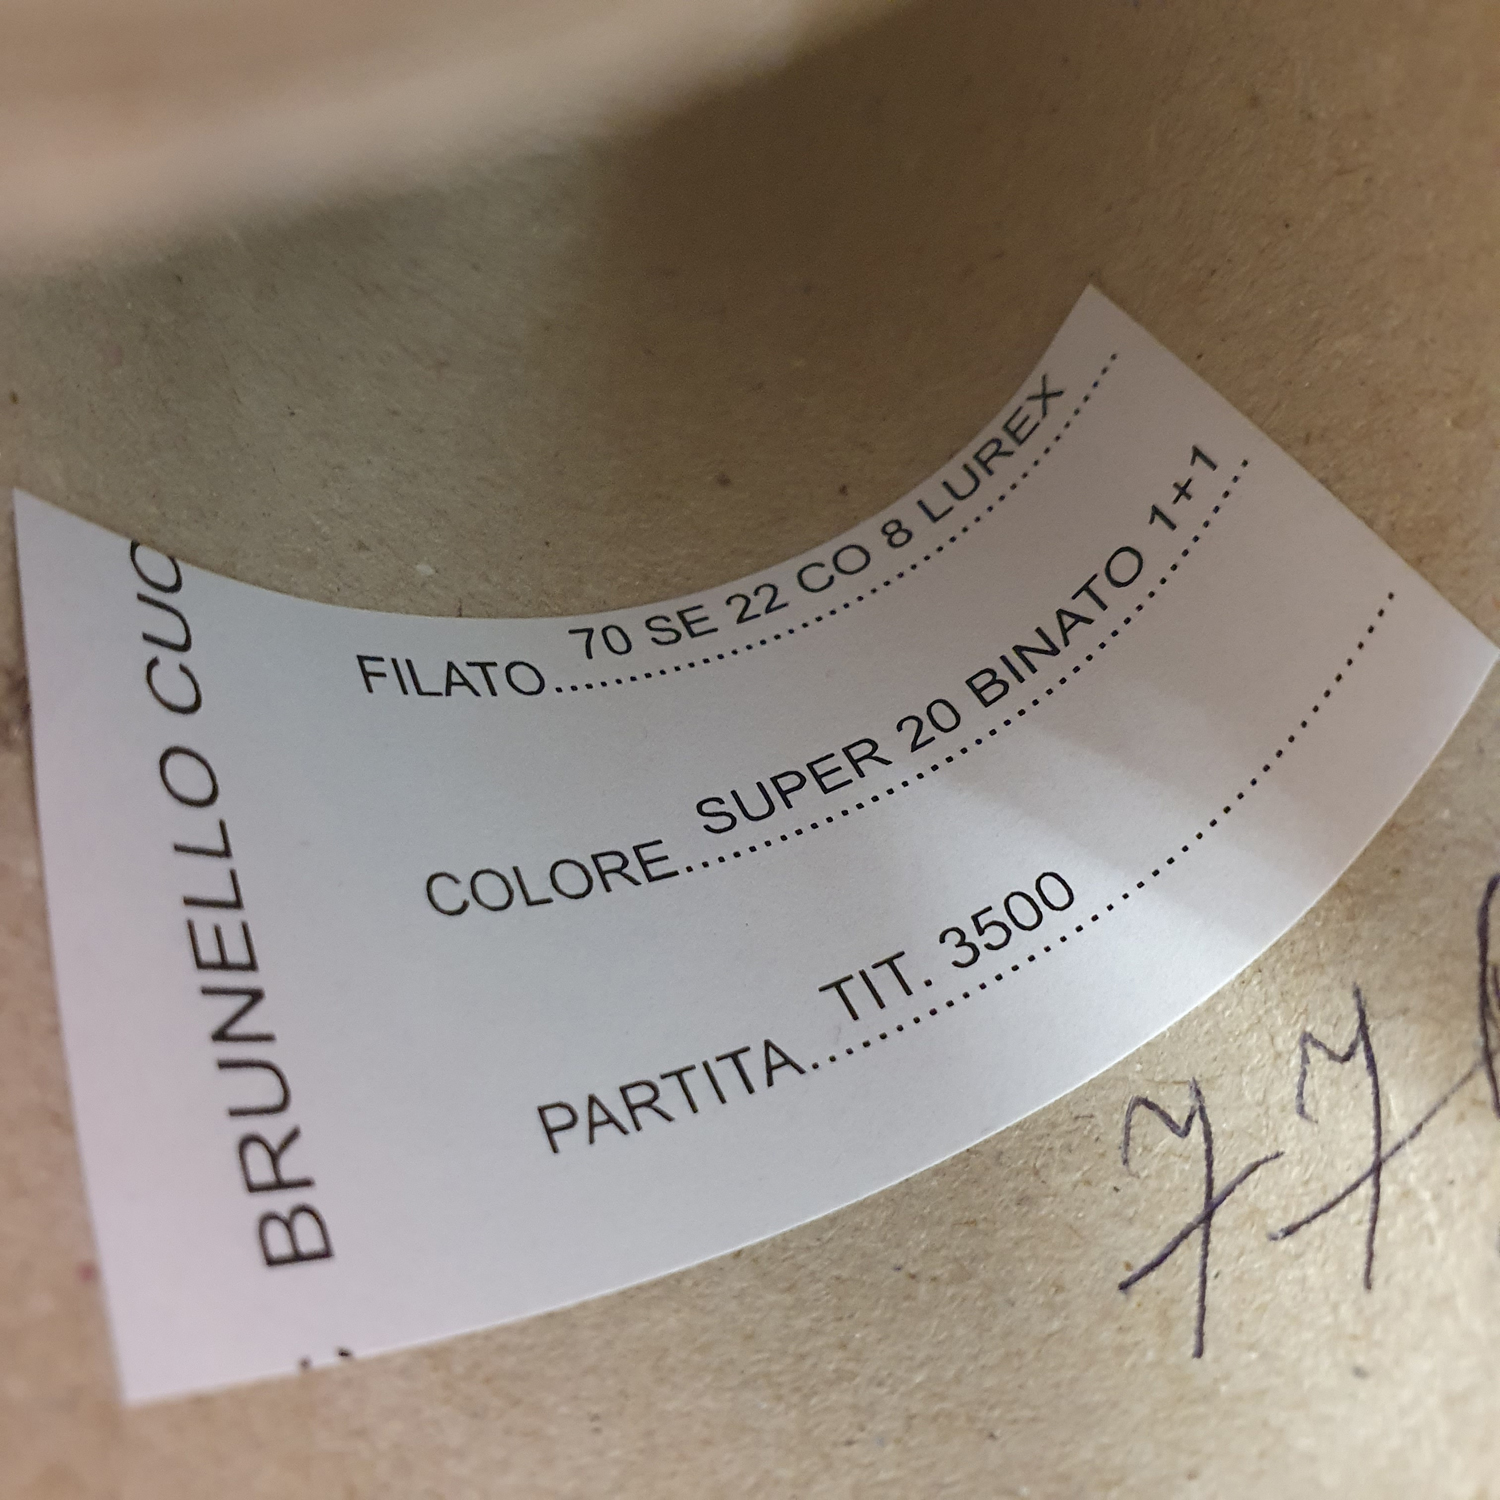 Пряжа шелковая Brunello Cucinelli Super 20 Binato, цвет Бронза, фото 1